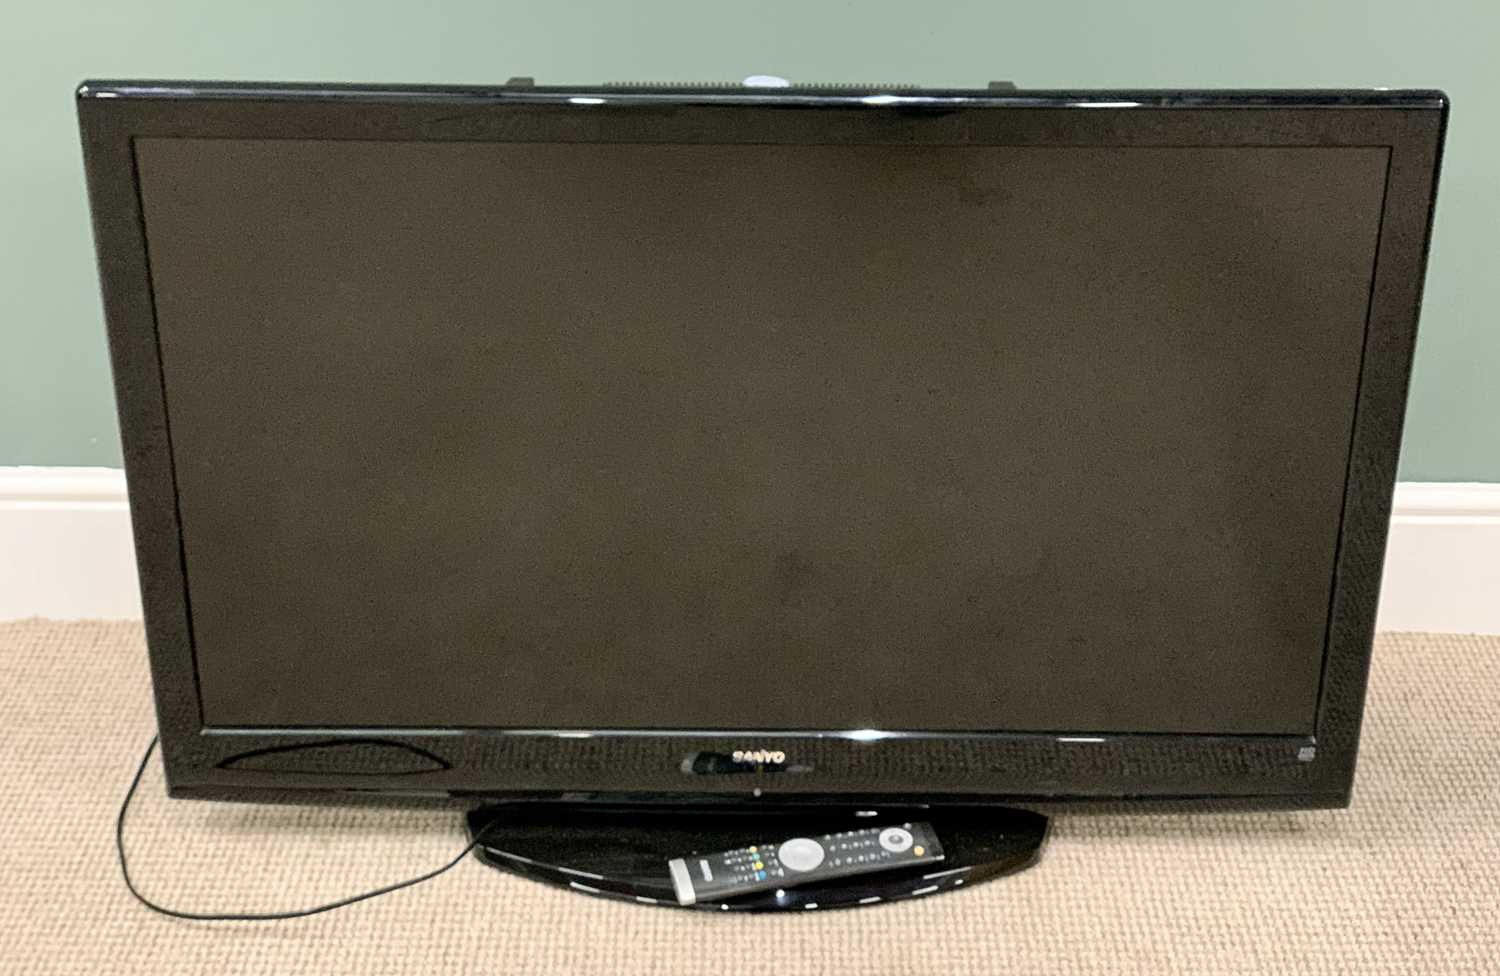 SANYO 42ins LCD TV - with remote control E/T